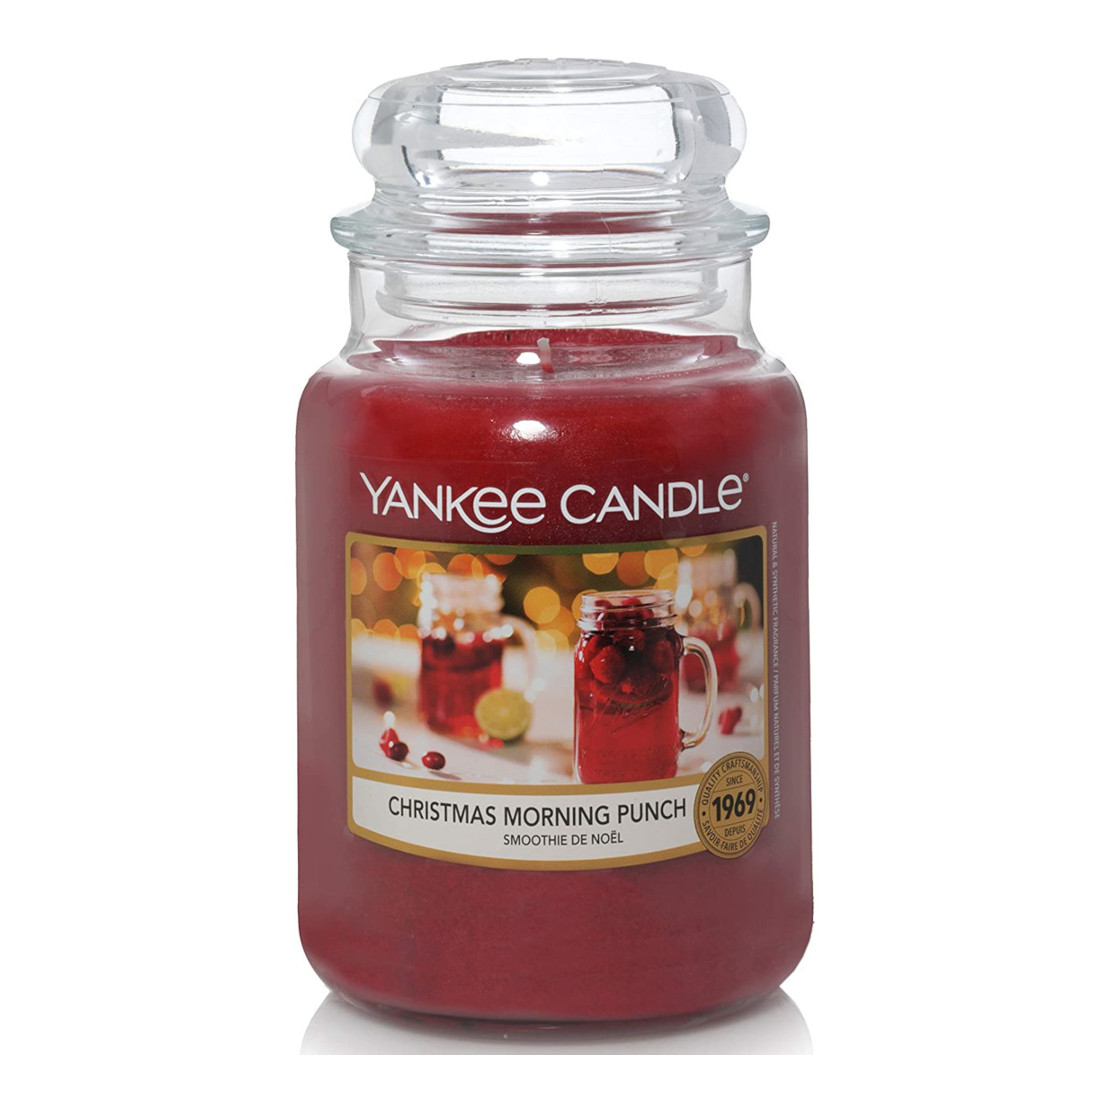 Yankee Candle Christmas Morning Punch Large Jar